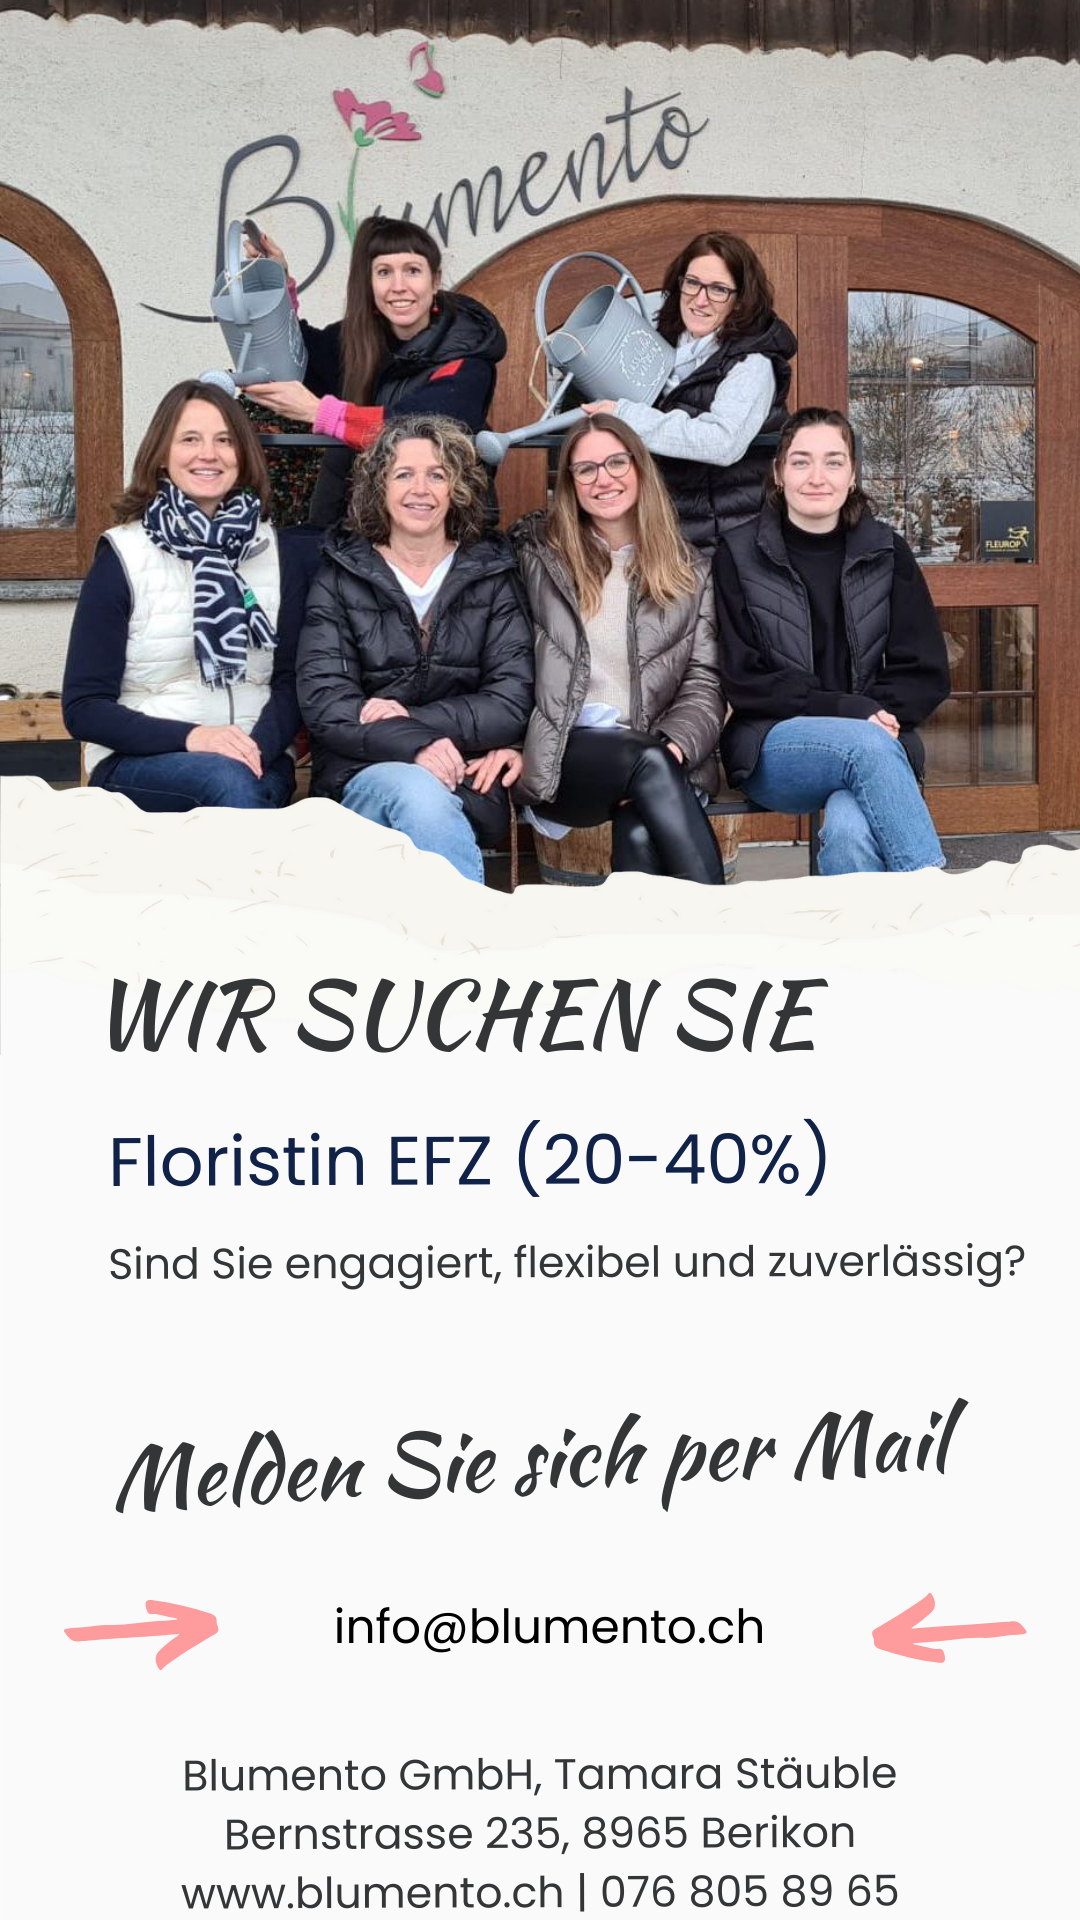 Offene Stelle als Floristin EFZ (20 - 40%)